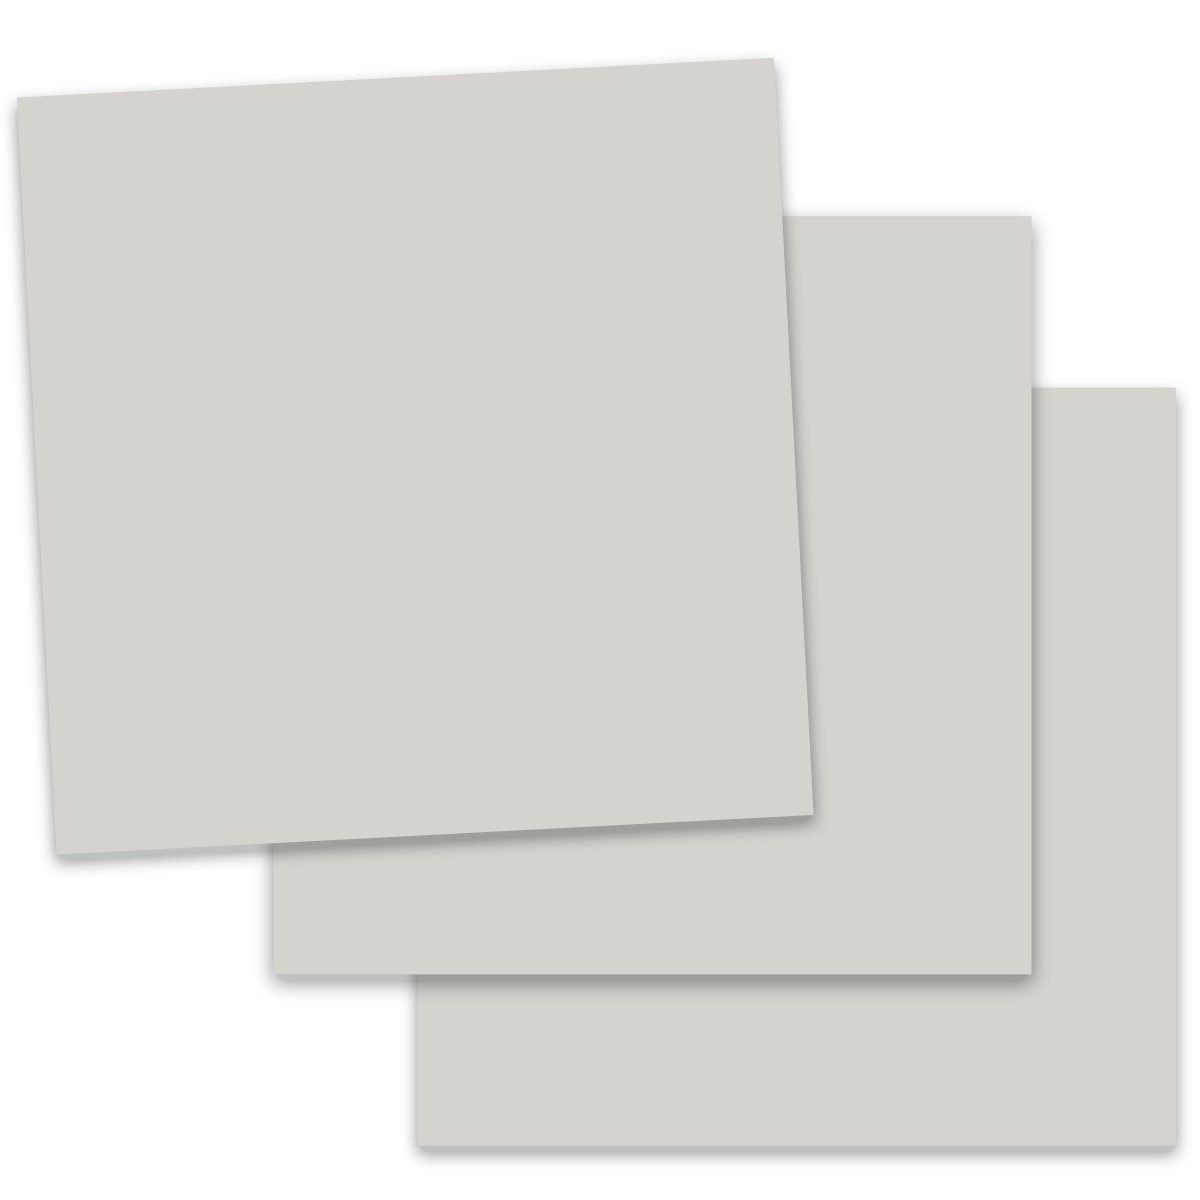 Burano Yellow (07) - 11X17 Cardstock Paper - 92Lb Cover (250Gsm) - 100 Pk  [Dd]